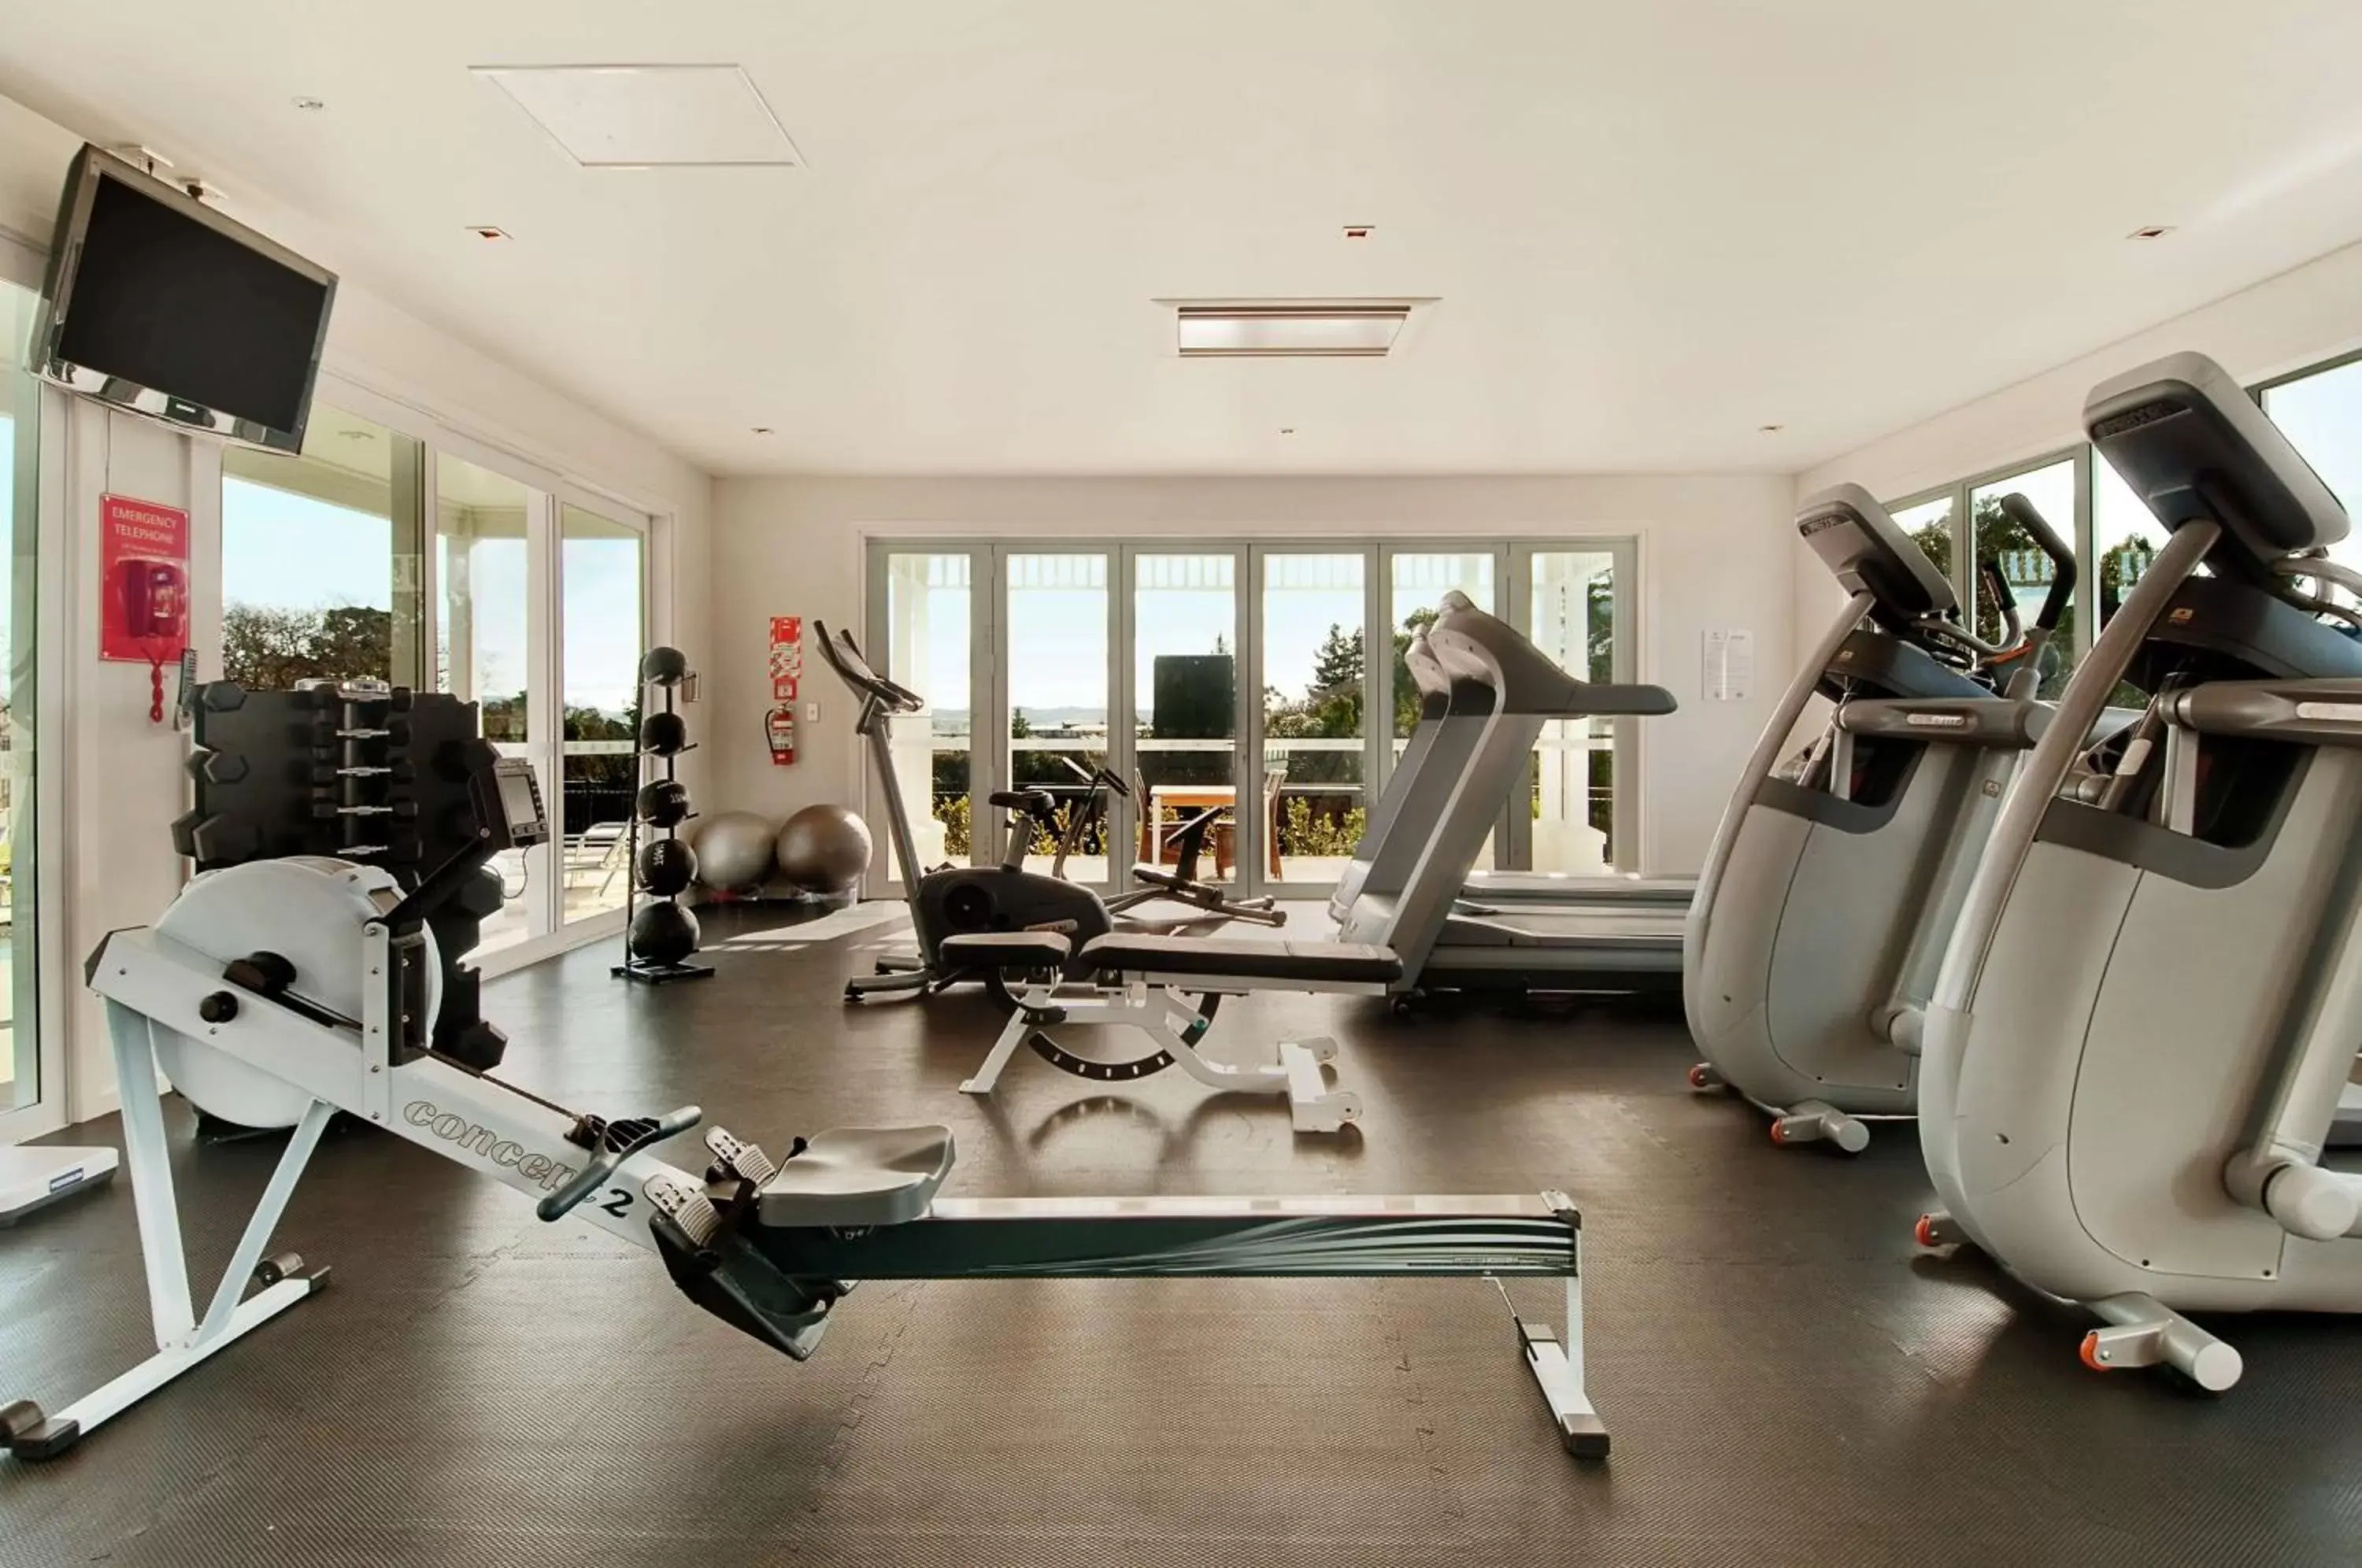 Fitness centre/facilities, Fitness Center/Facilities in Hilton Lake Taupo